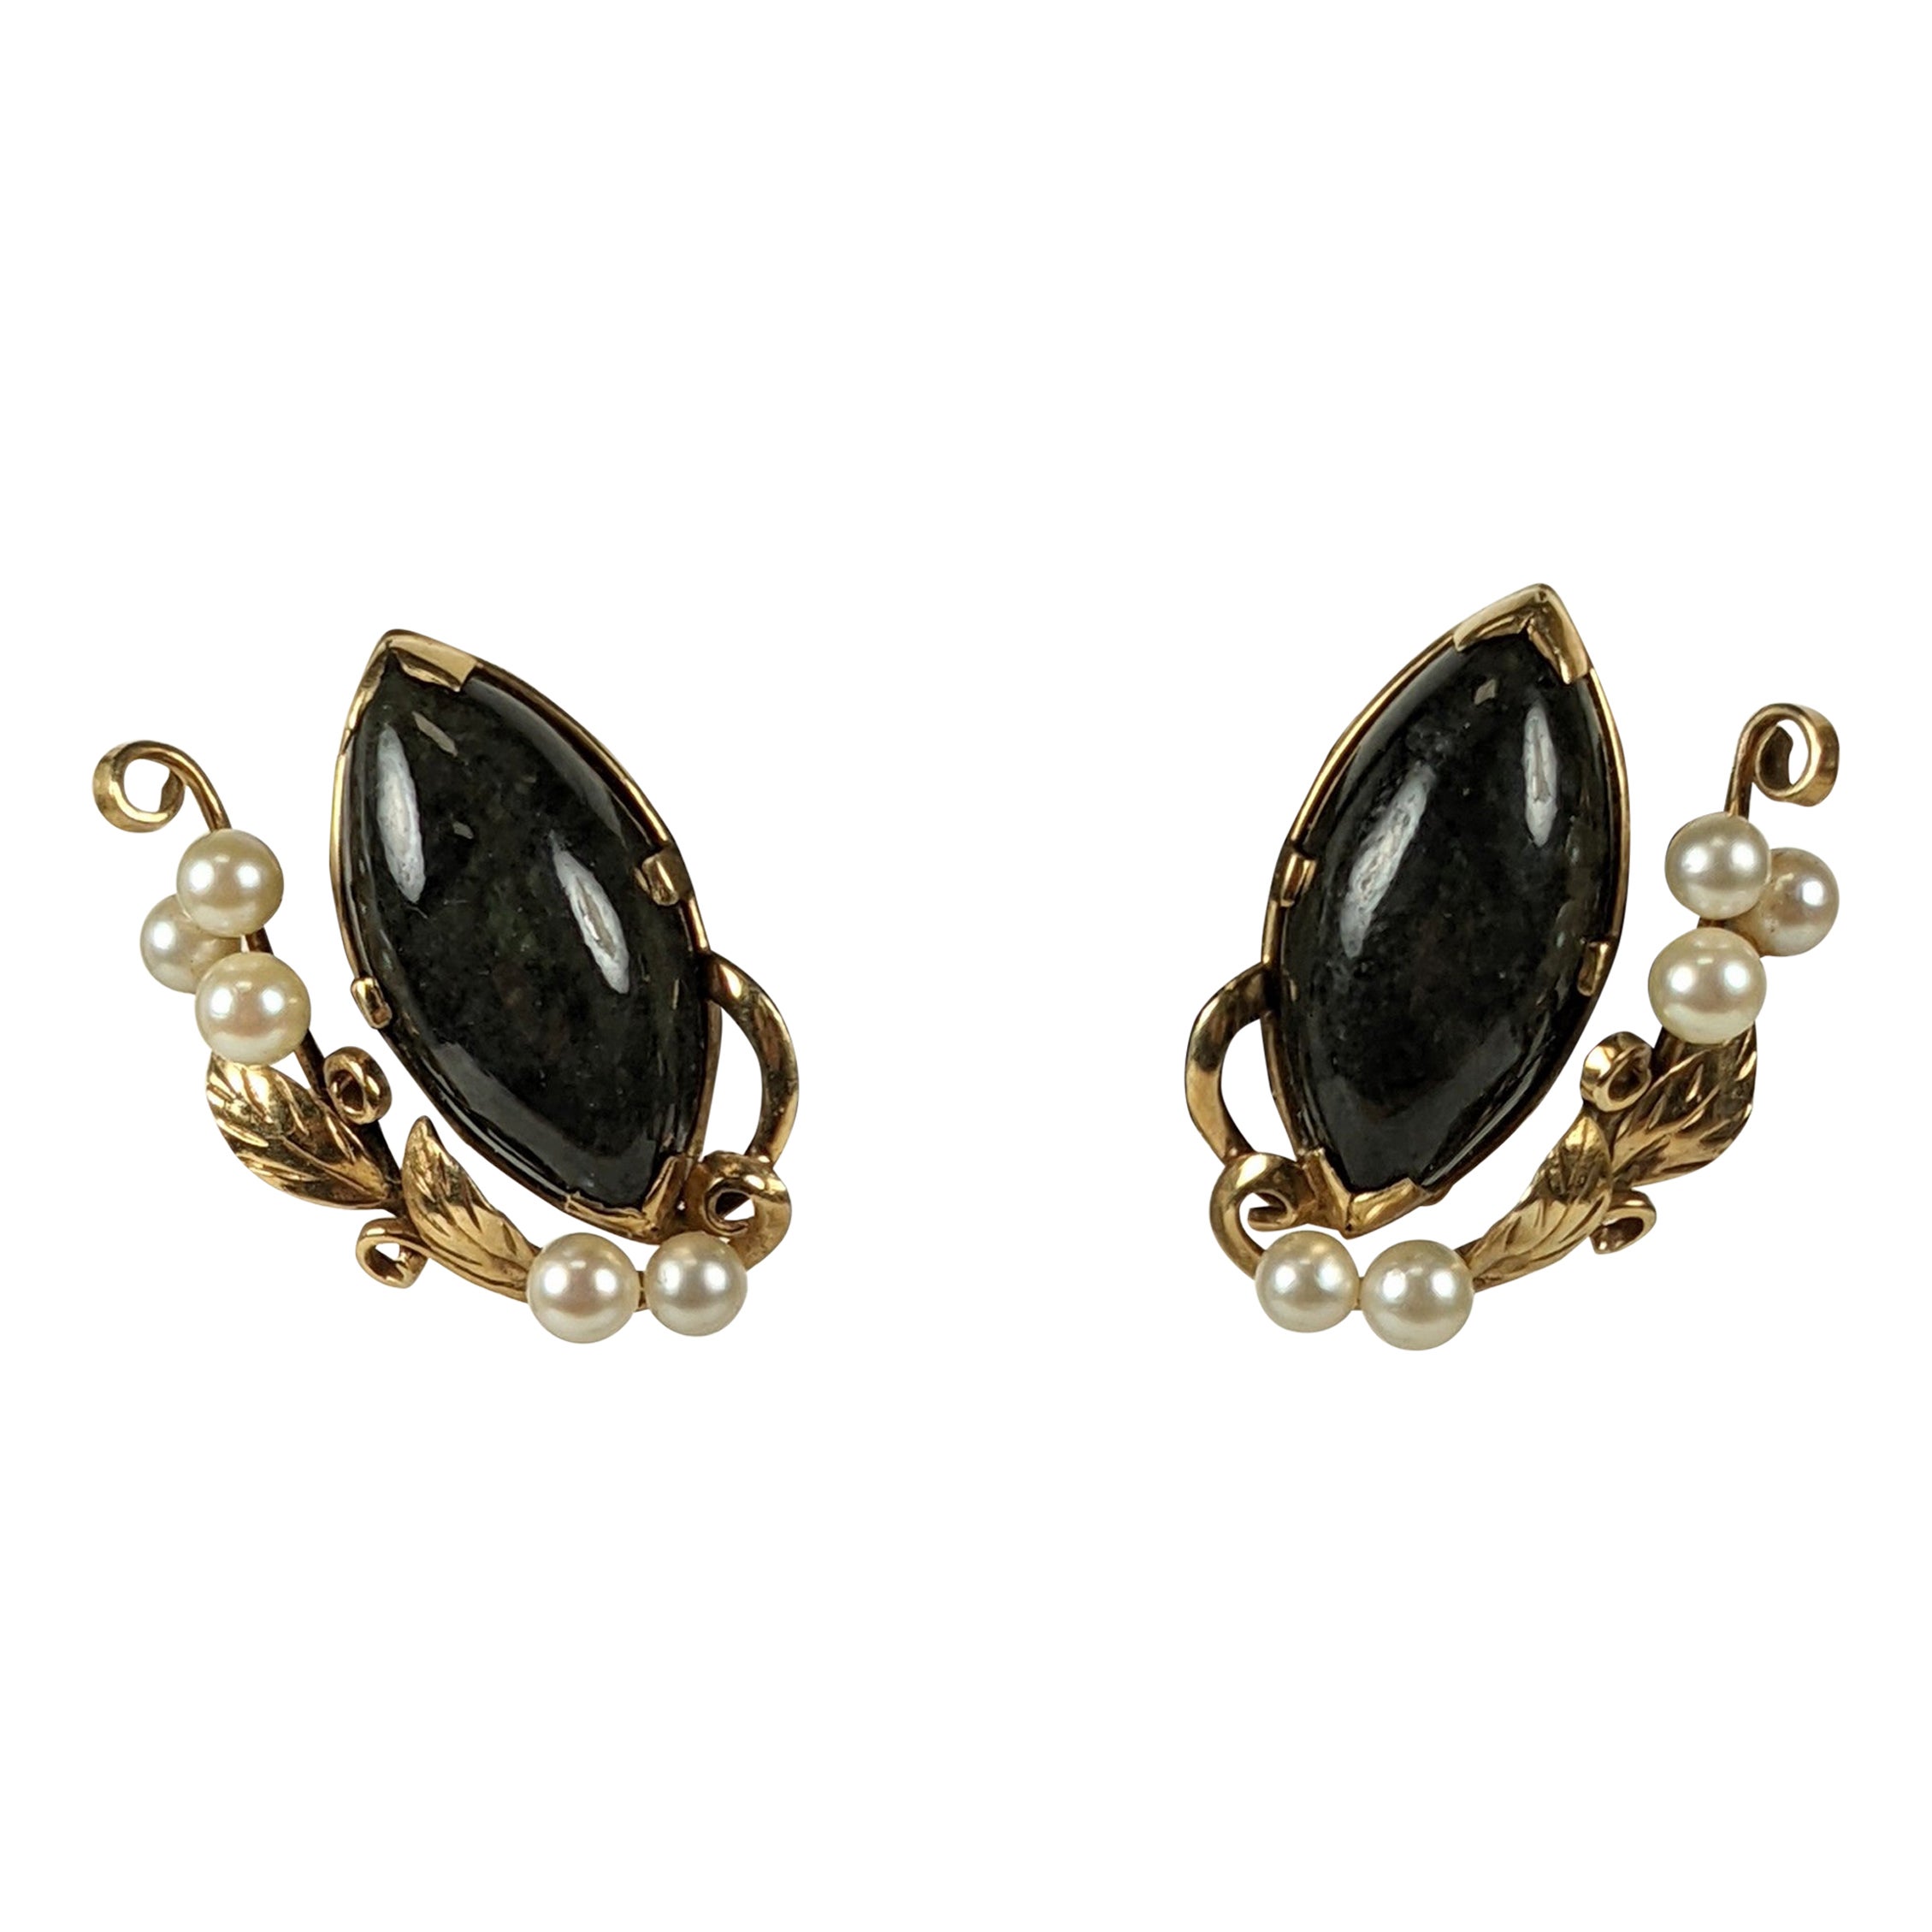 Ming's Black Jade and Cultured Pearl Leaf Earrings